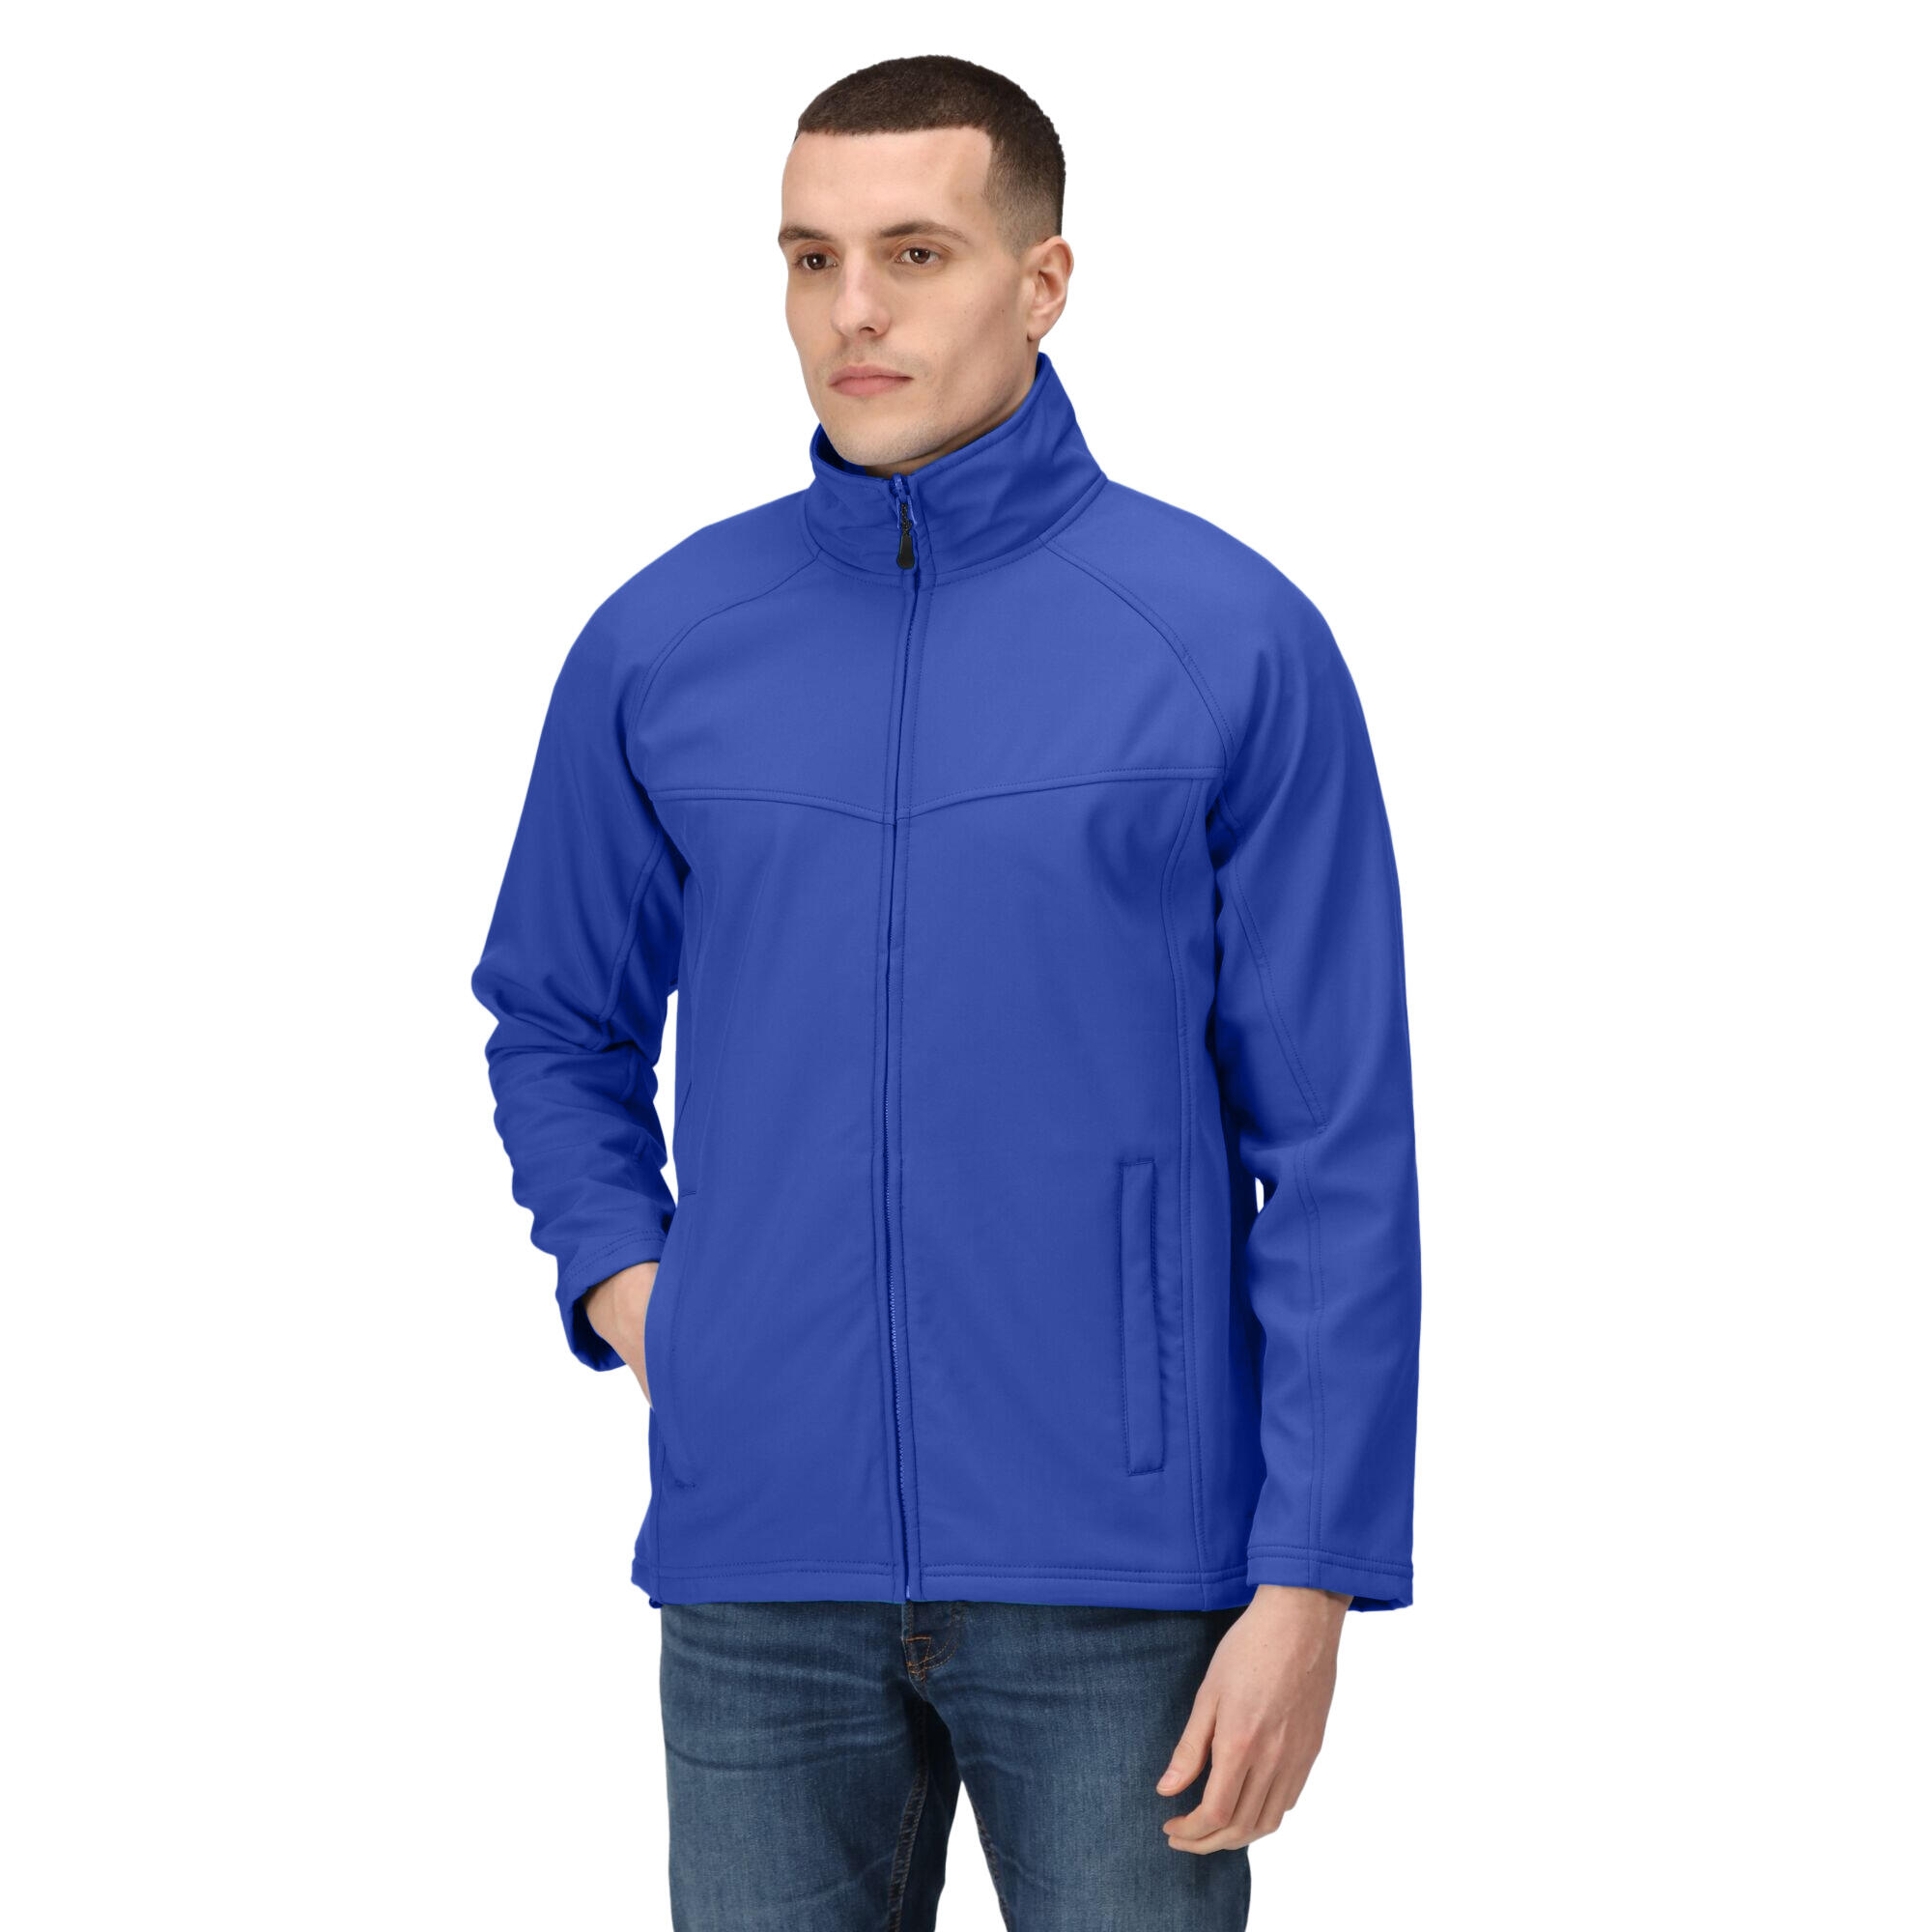 Mens Uproar Lightweight Wind Resistant Softshell Jacket (Royal Blue/Seal Grey) 3/4